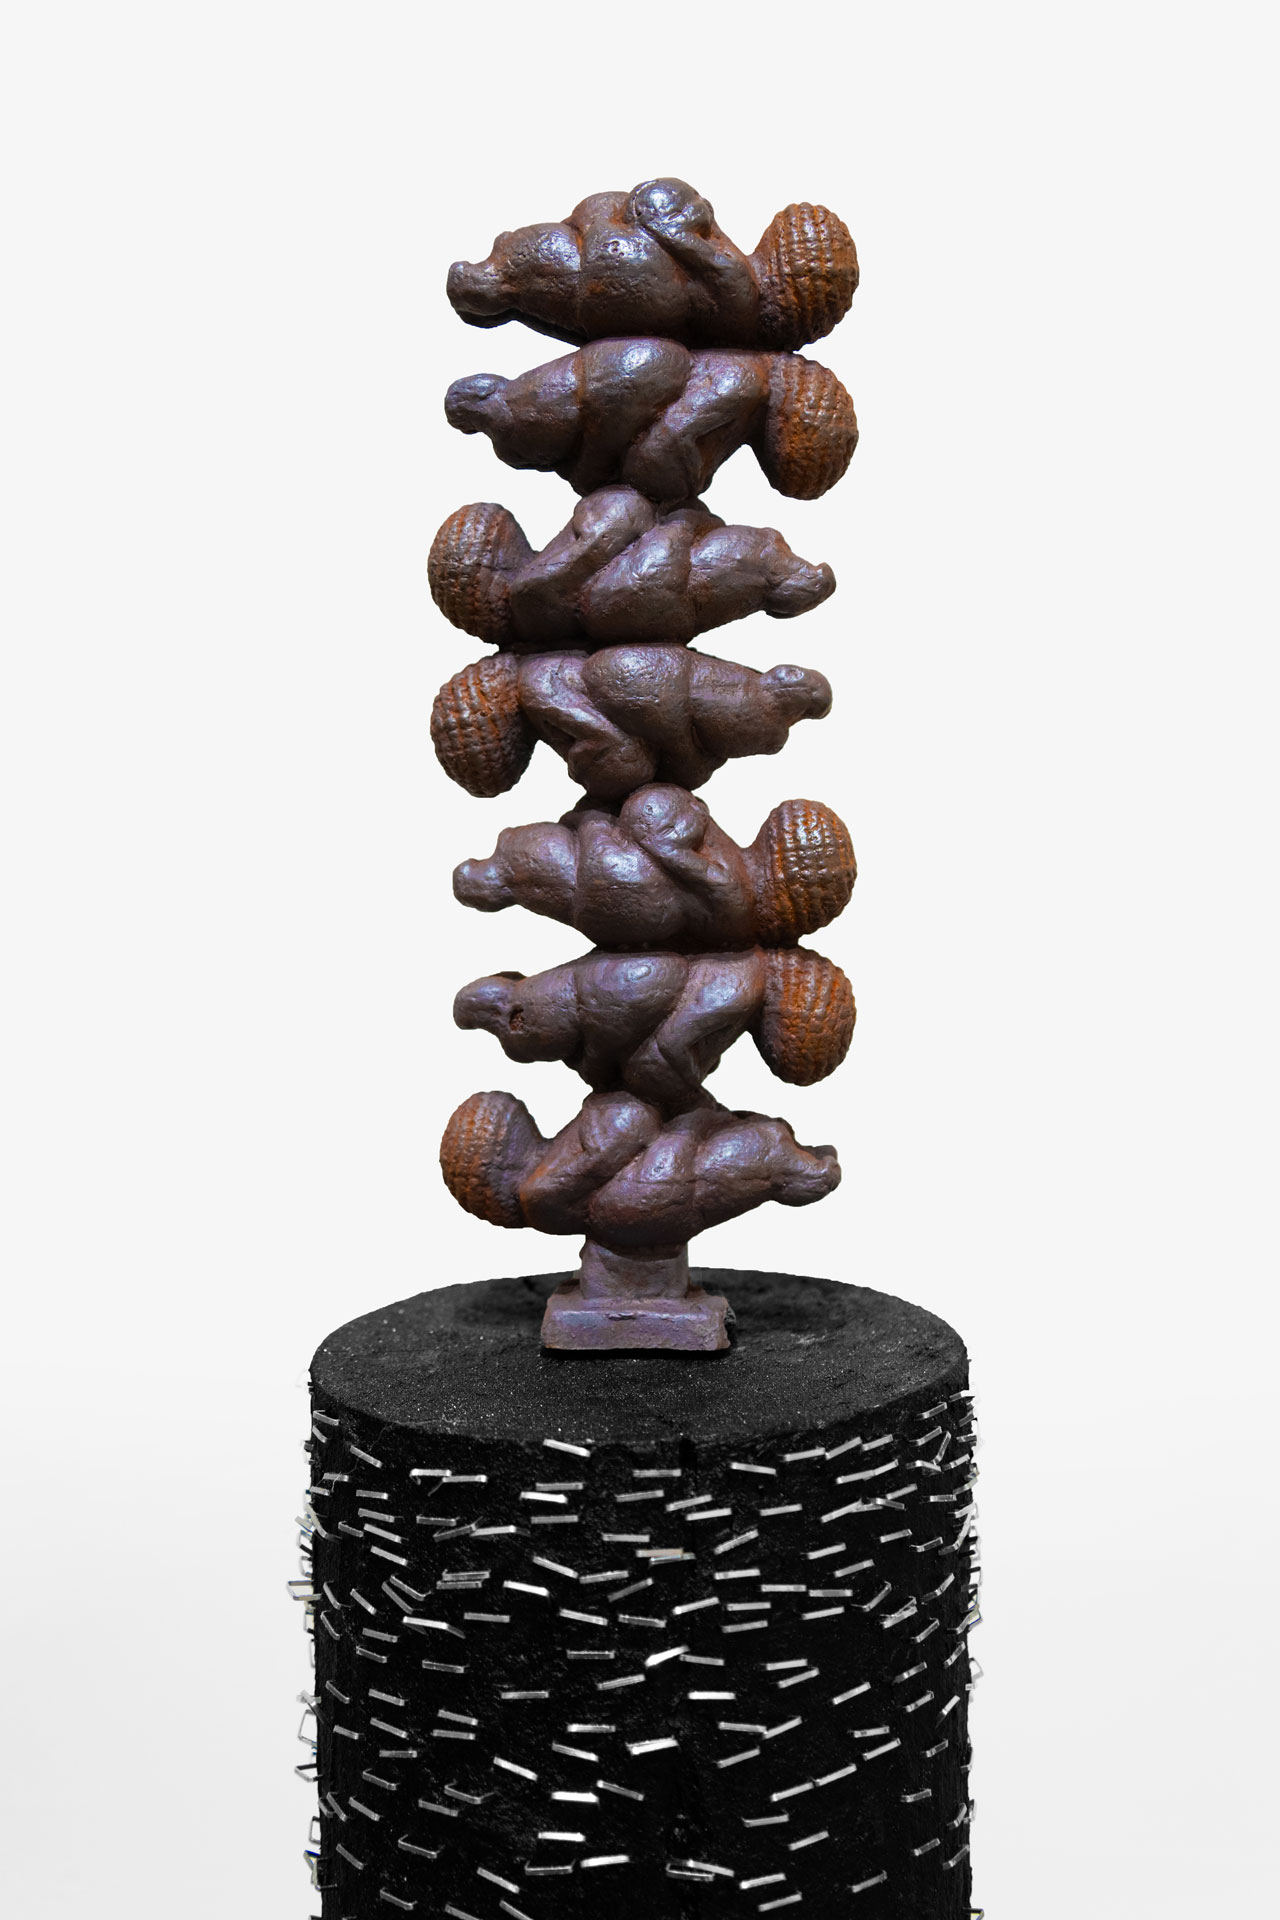 Scottie Burgess installation art sculpture cast iron power object ritual cuttup magick venus of willendorf